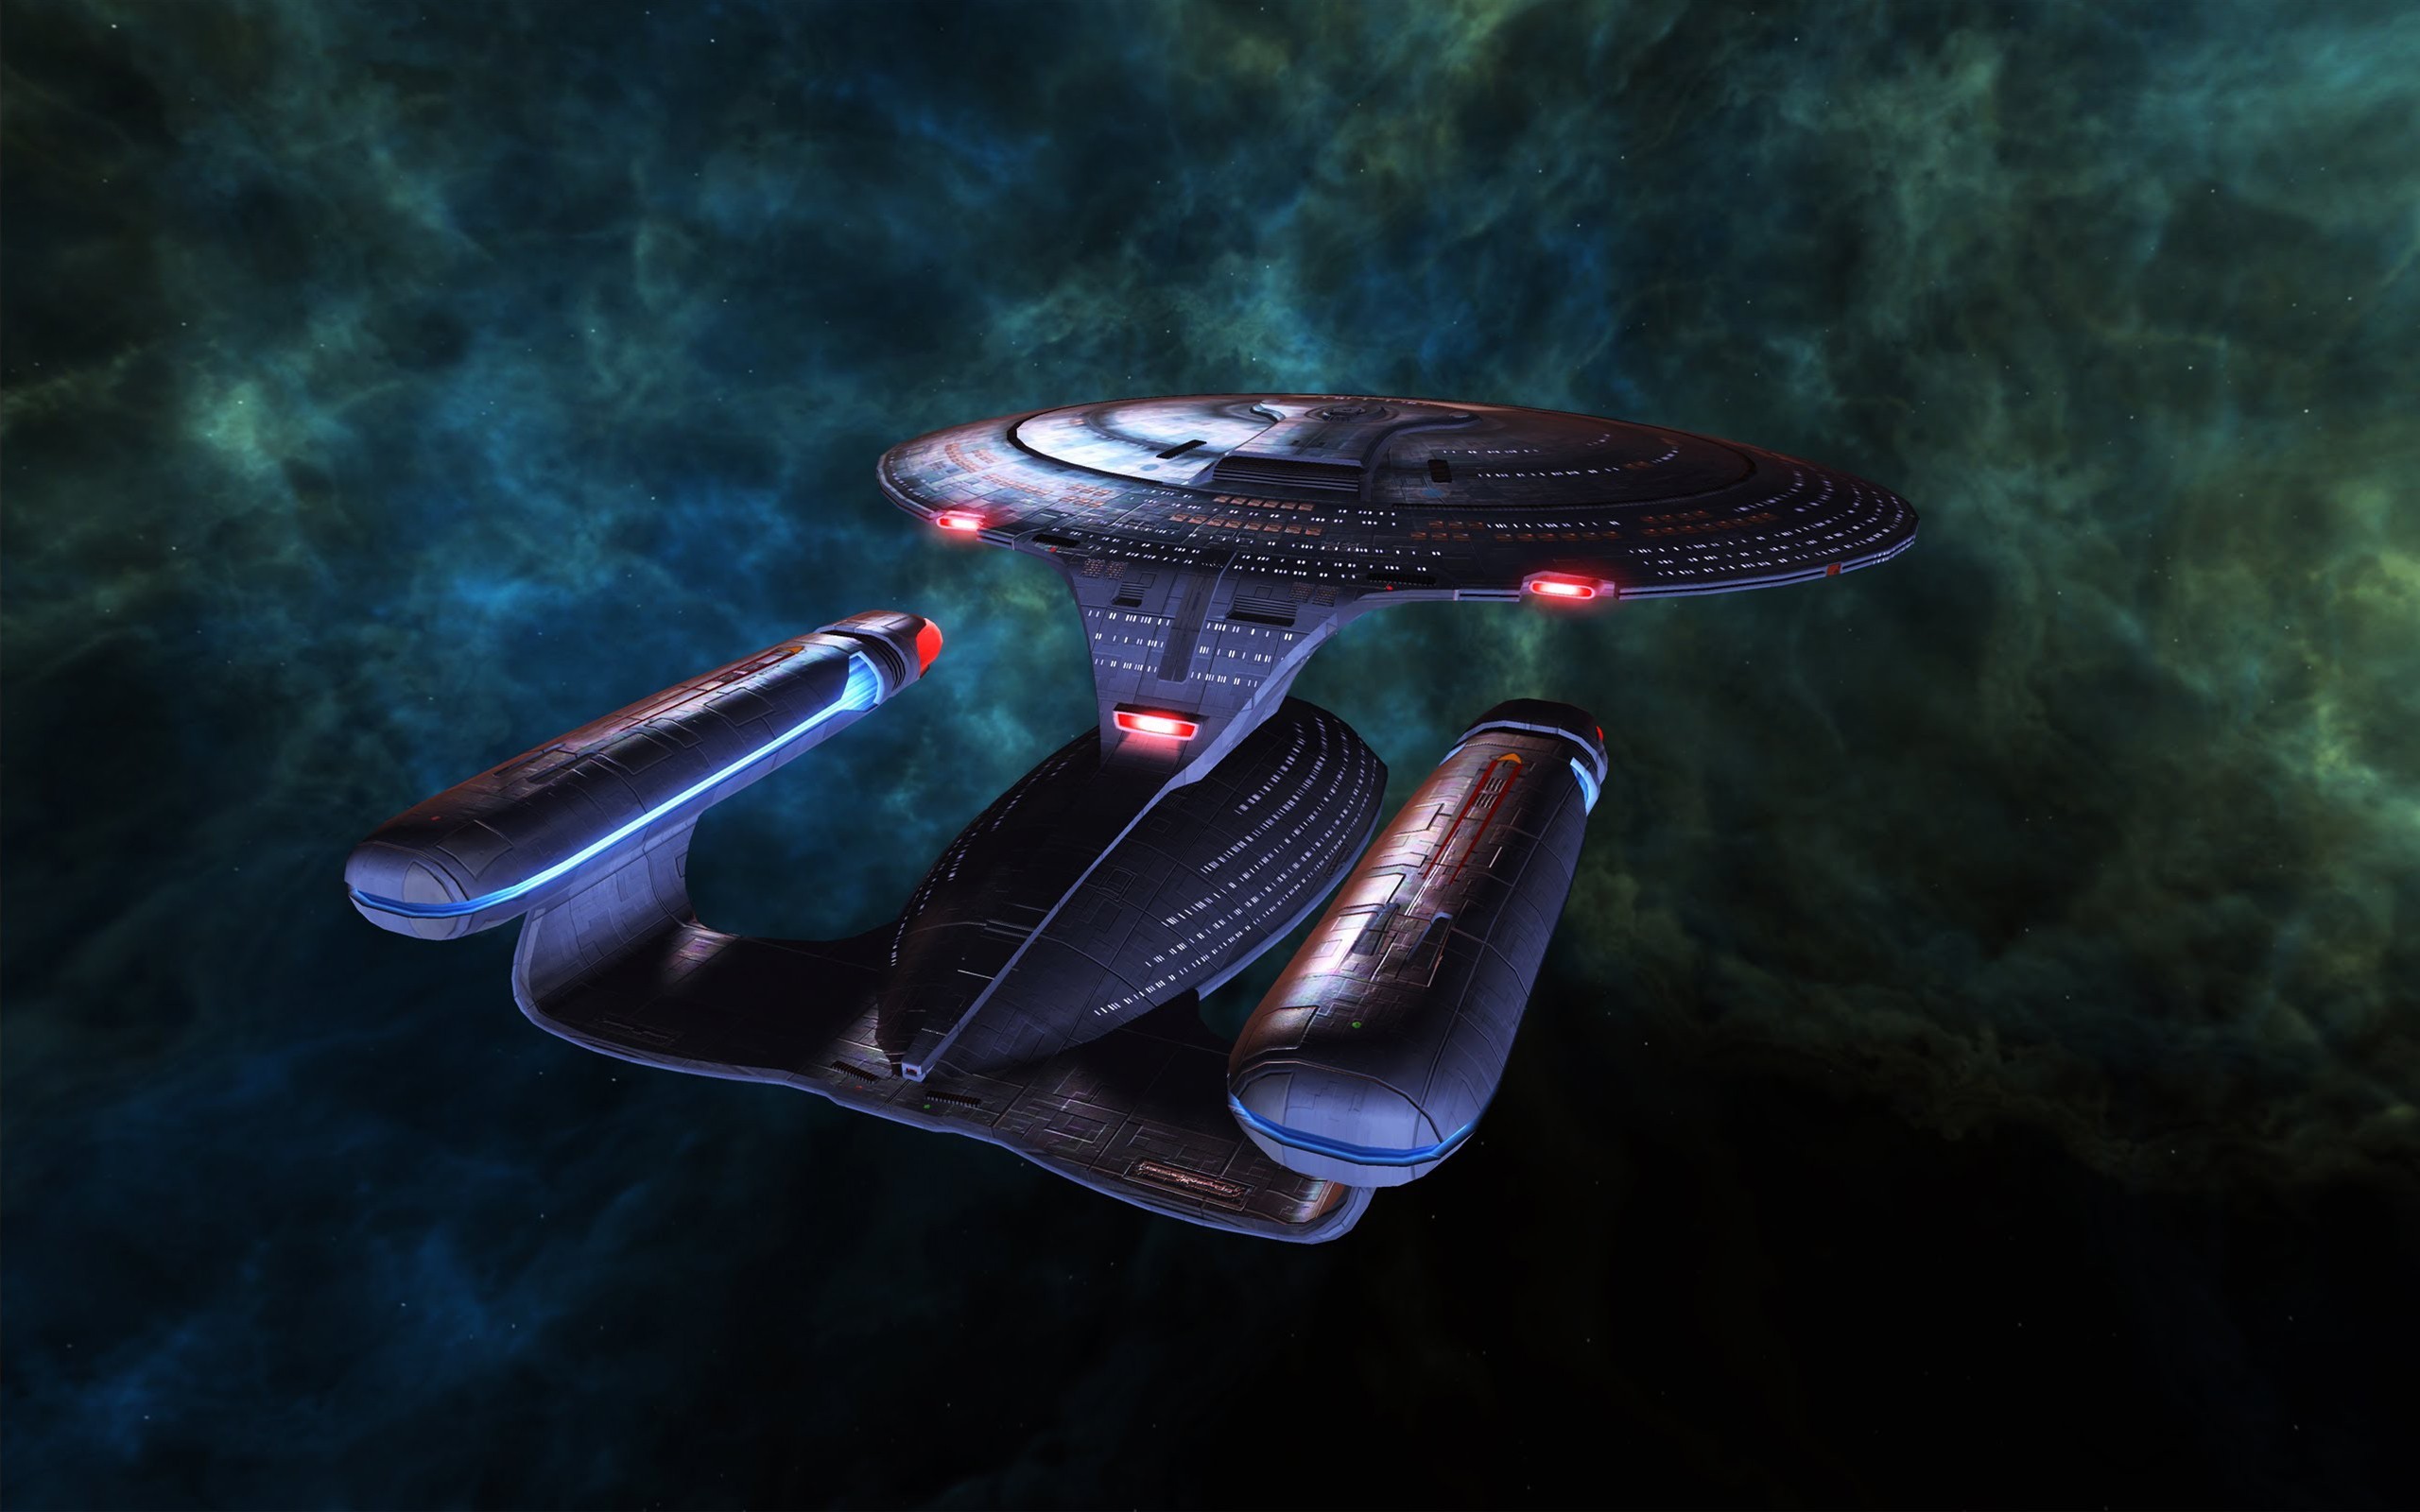 General 2560x1600 Star Trek USS Enterprise (spaceship) Star Trek Ships NCC-1701 Enterprise D vehicle spaceship science fiction TV series Star Trek: TNG star trek: the next generation